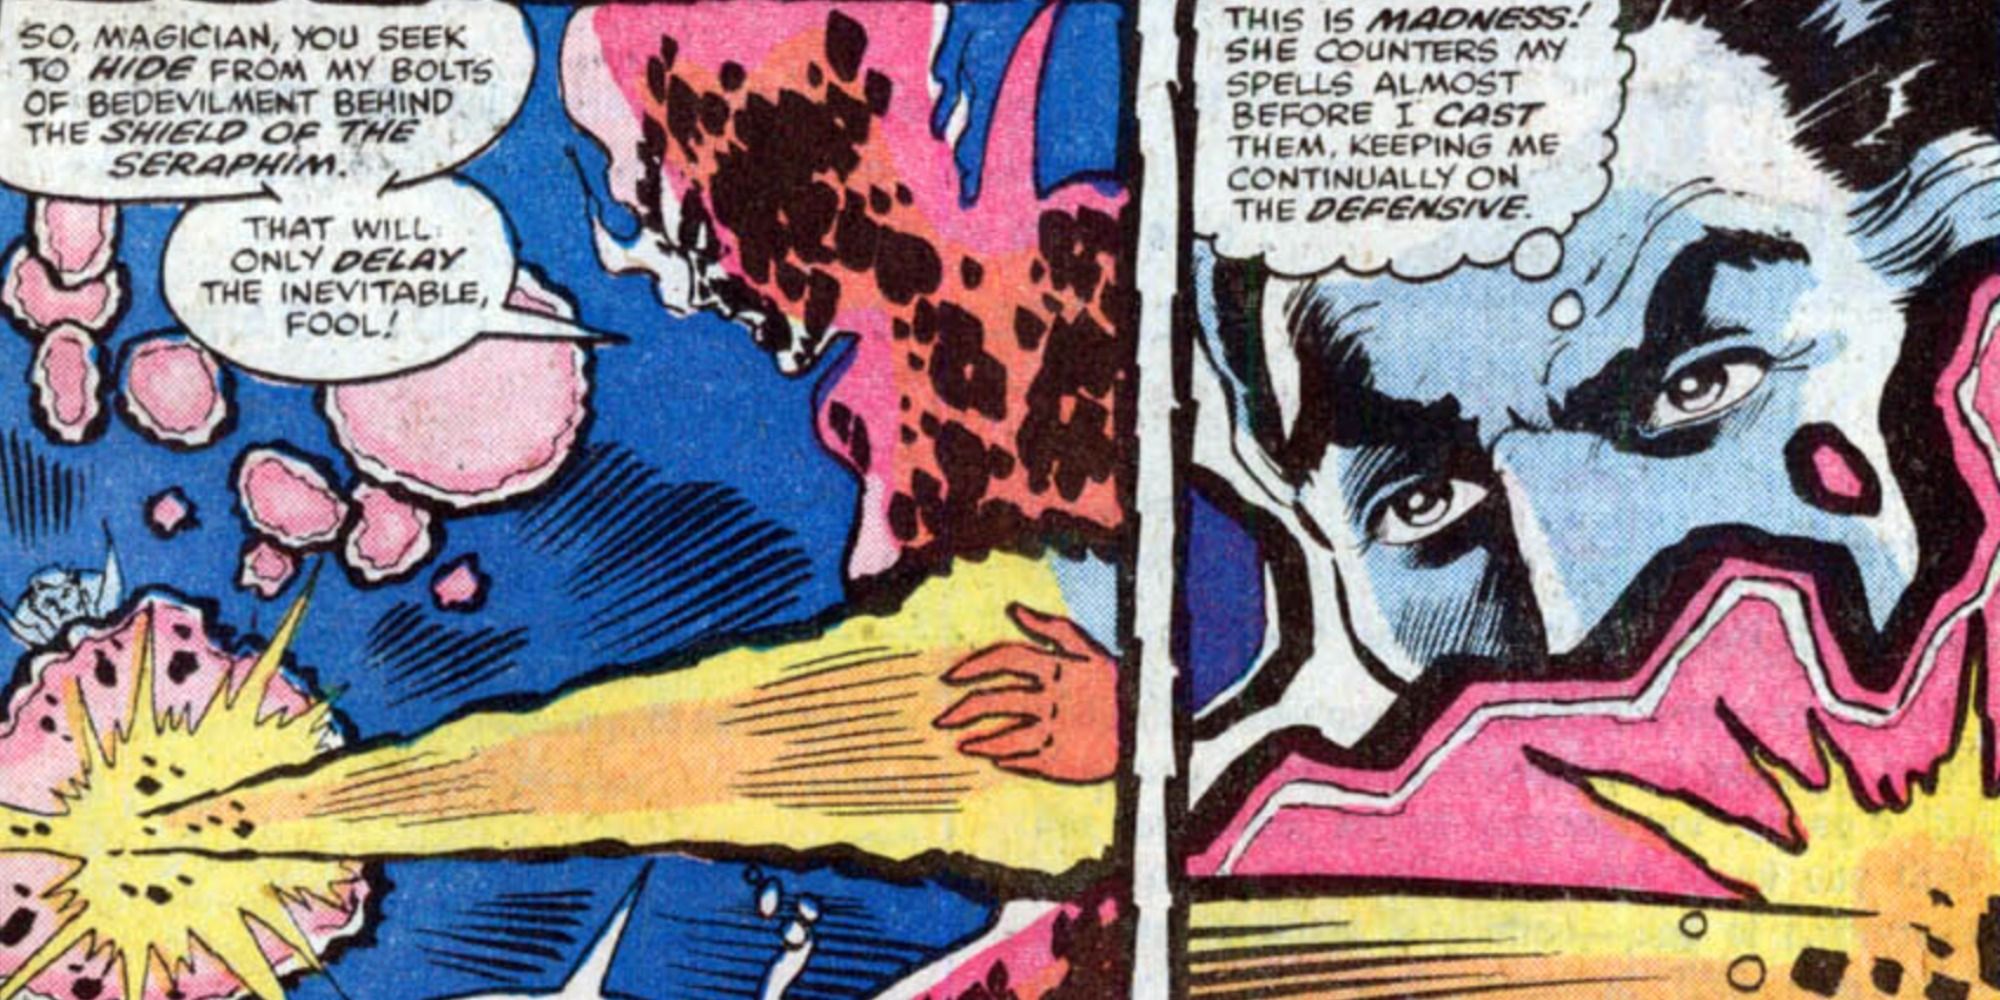 Evil Clea fights Doctor Strange in Marvel Comics.